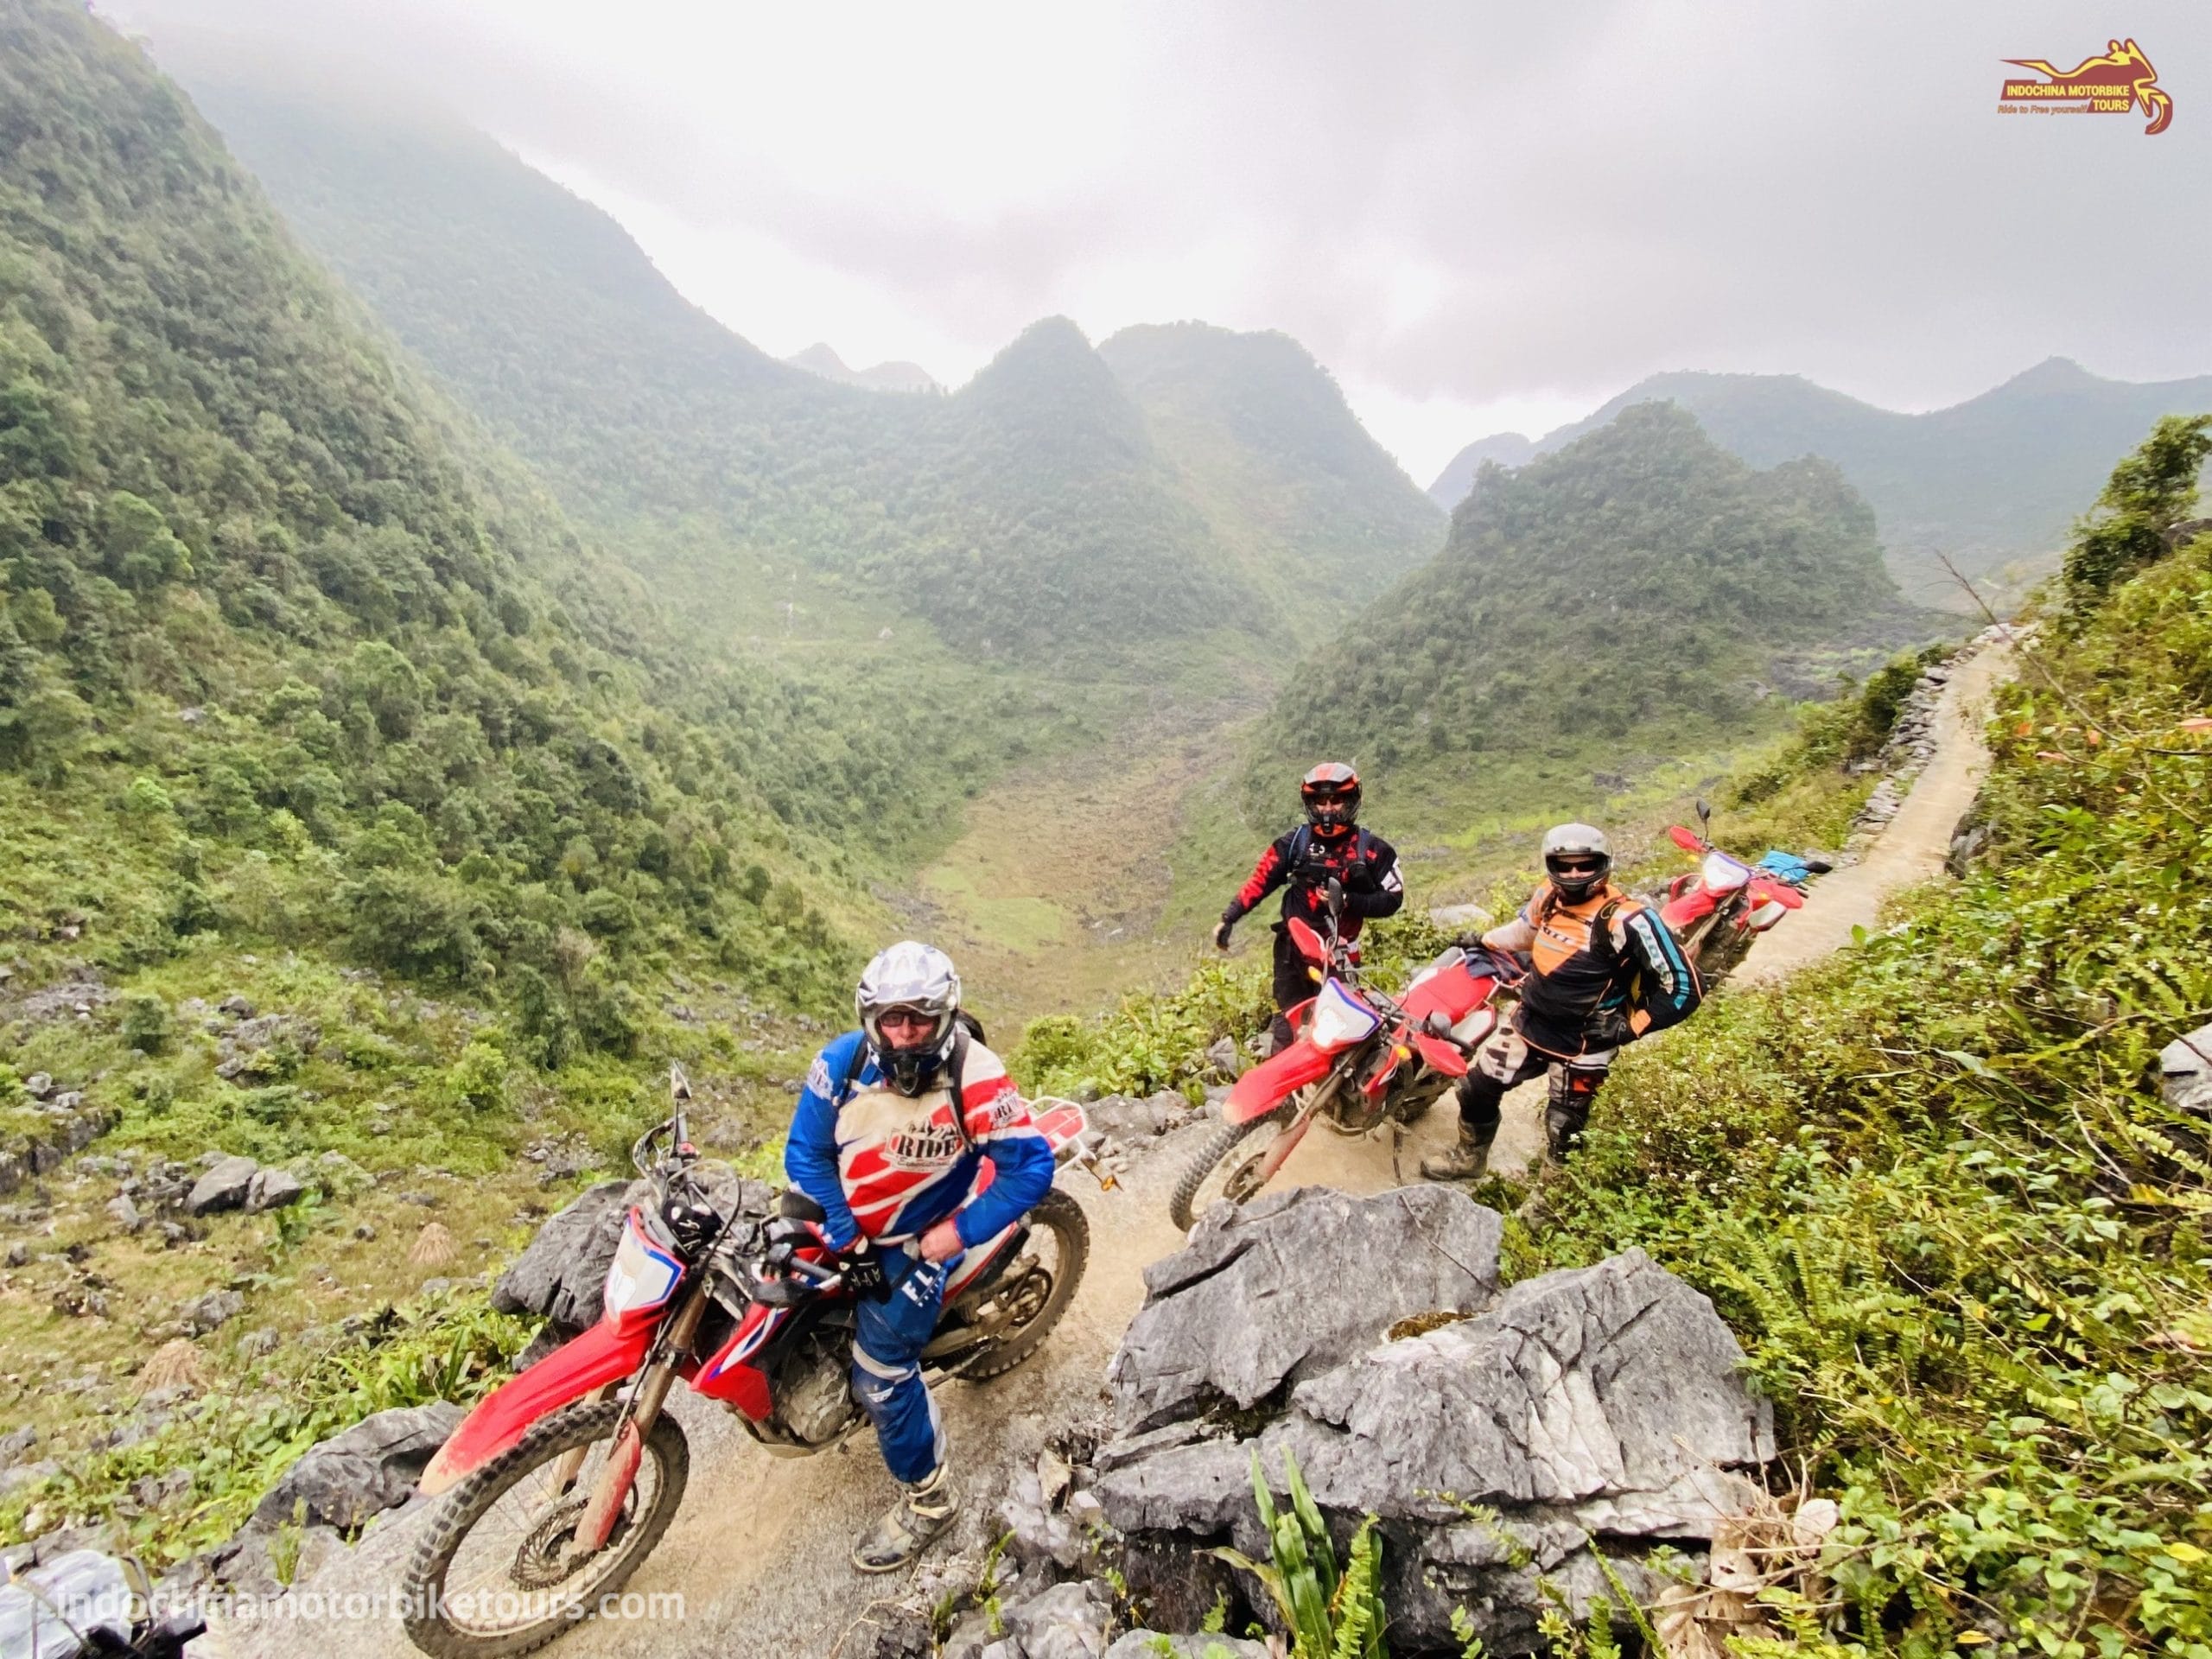 Unforgettable Vietnam Motorcycle Tour to Ha Giang, Sapa via Mu Cang Chai and Suoi Giang